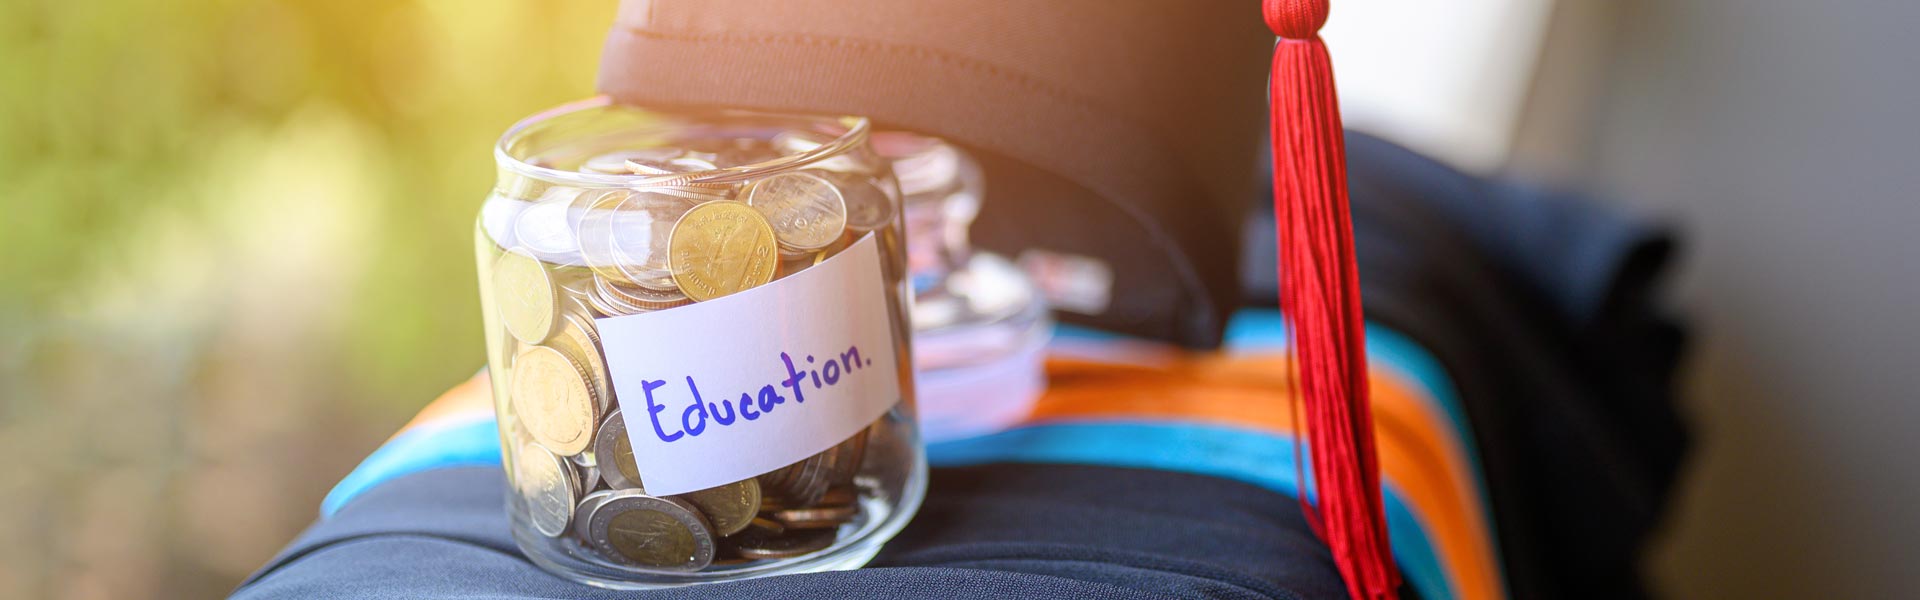 Money jar for Education